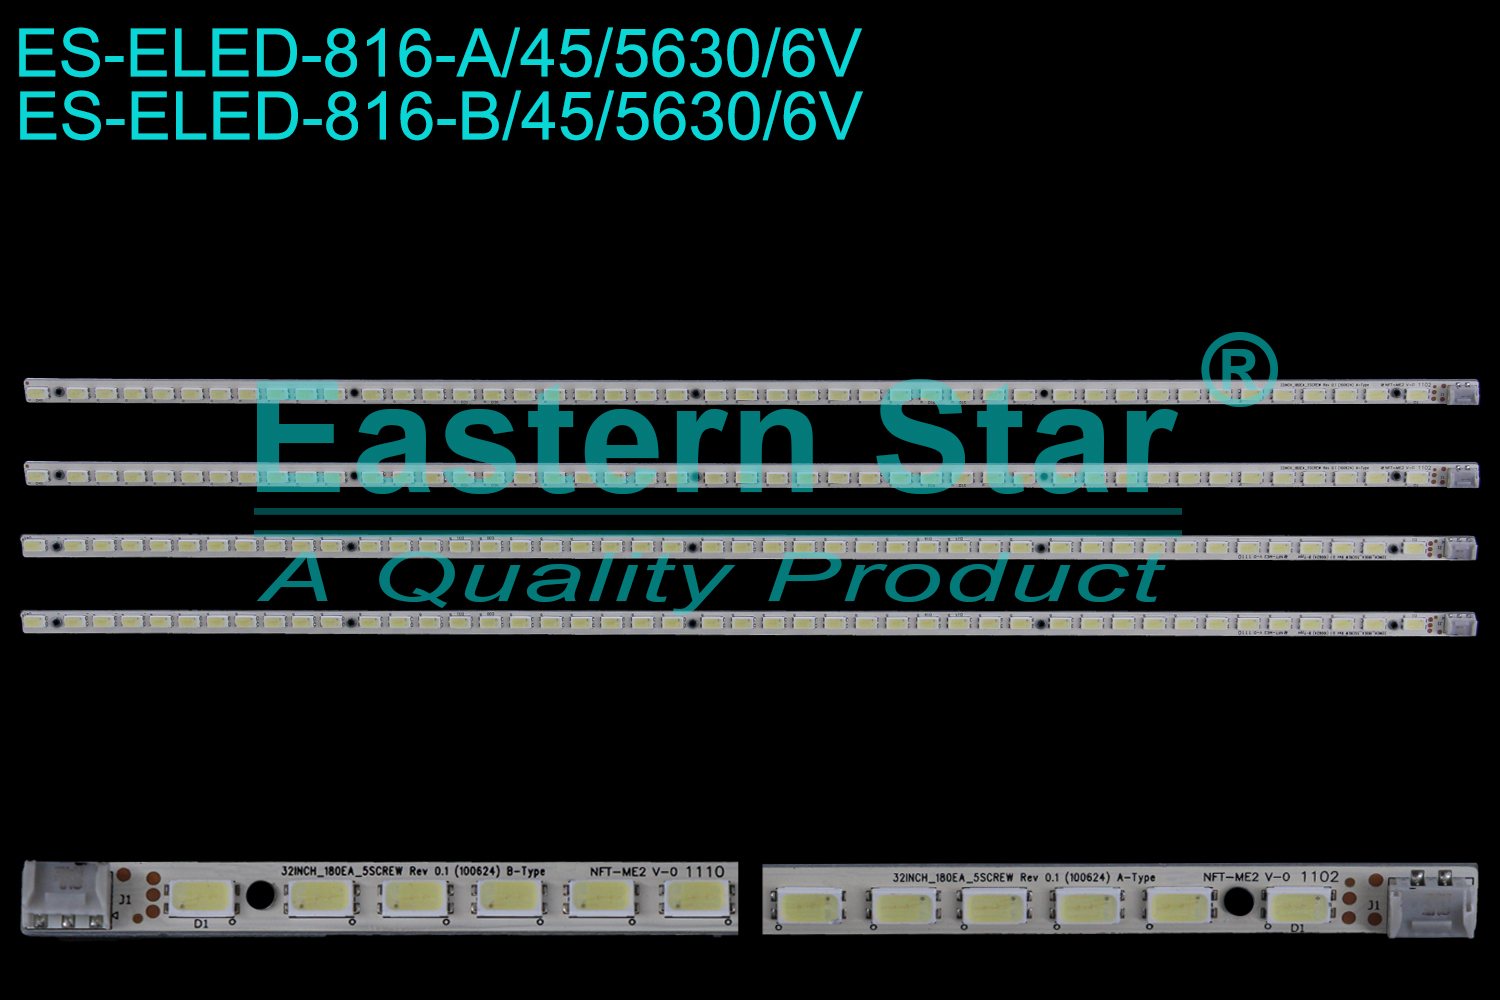 ES-ELED-816 ELED/EDGE TV backlight use for 32'' Lg 32PFL7665H 32INCH_180EA_5SCREW Rev 0.1 (100624) A-Type 32INCH_180EA_5SCREW Rev 0.1 (100624) B-Type LED STRIPS(4)